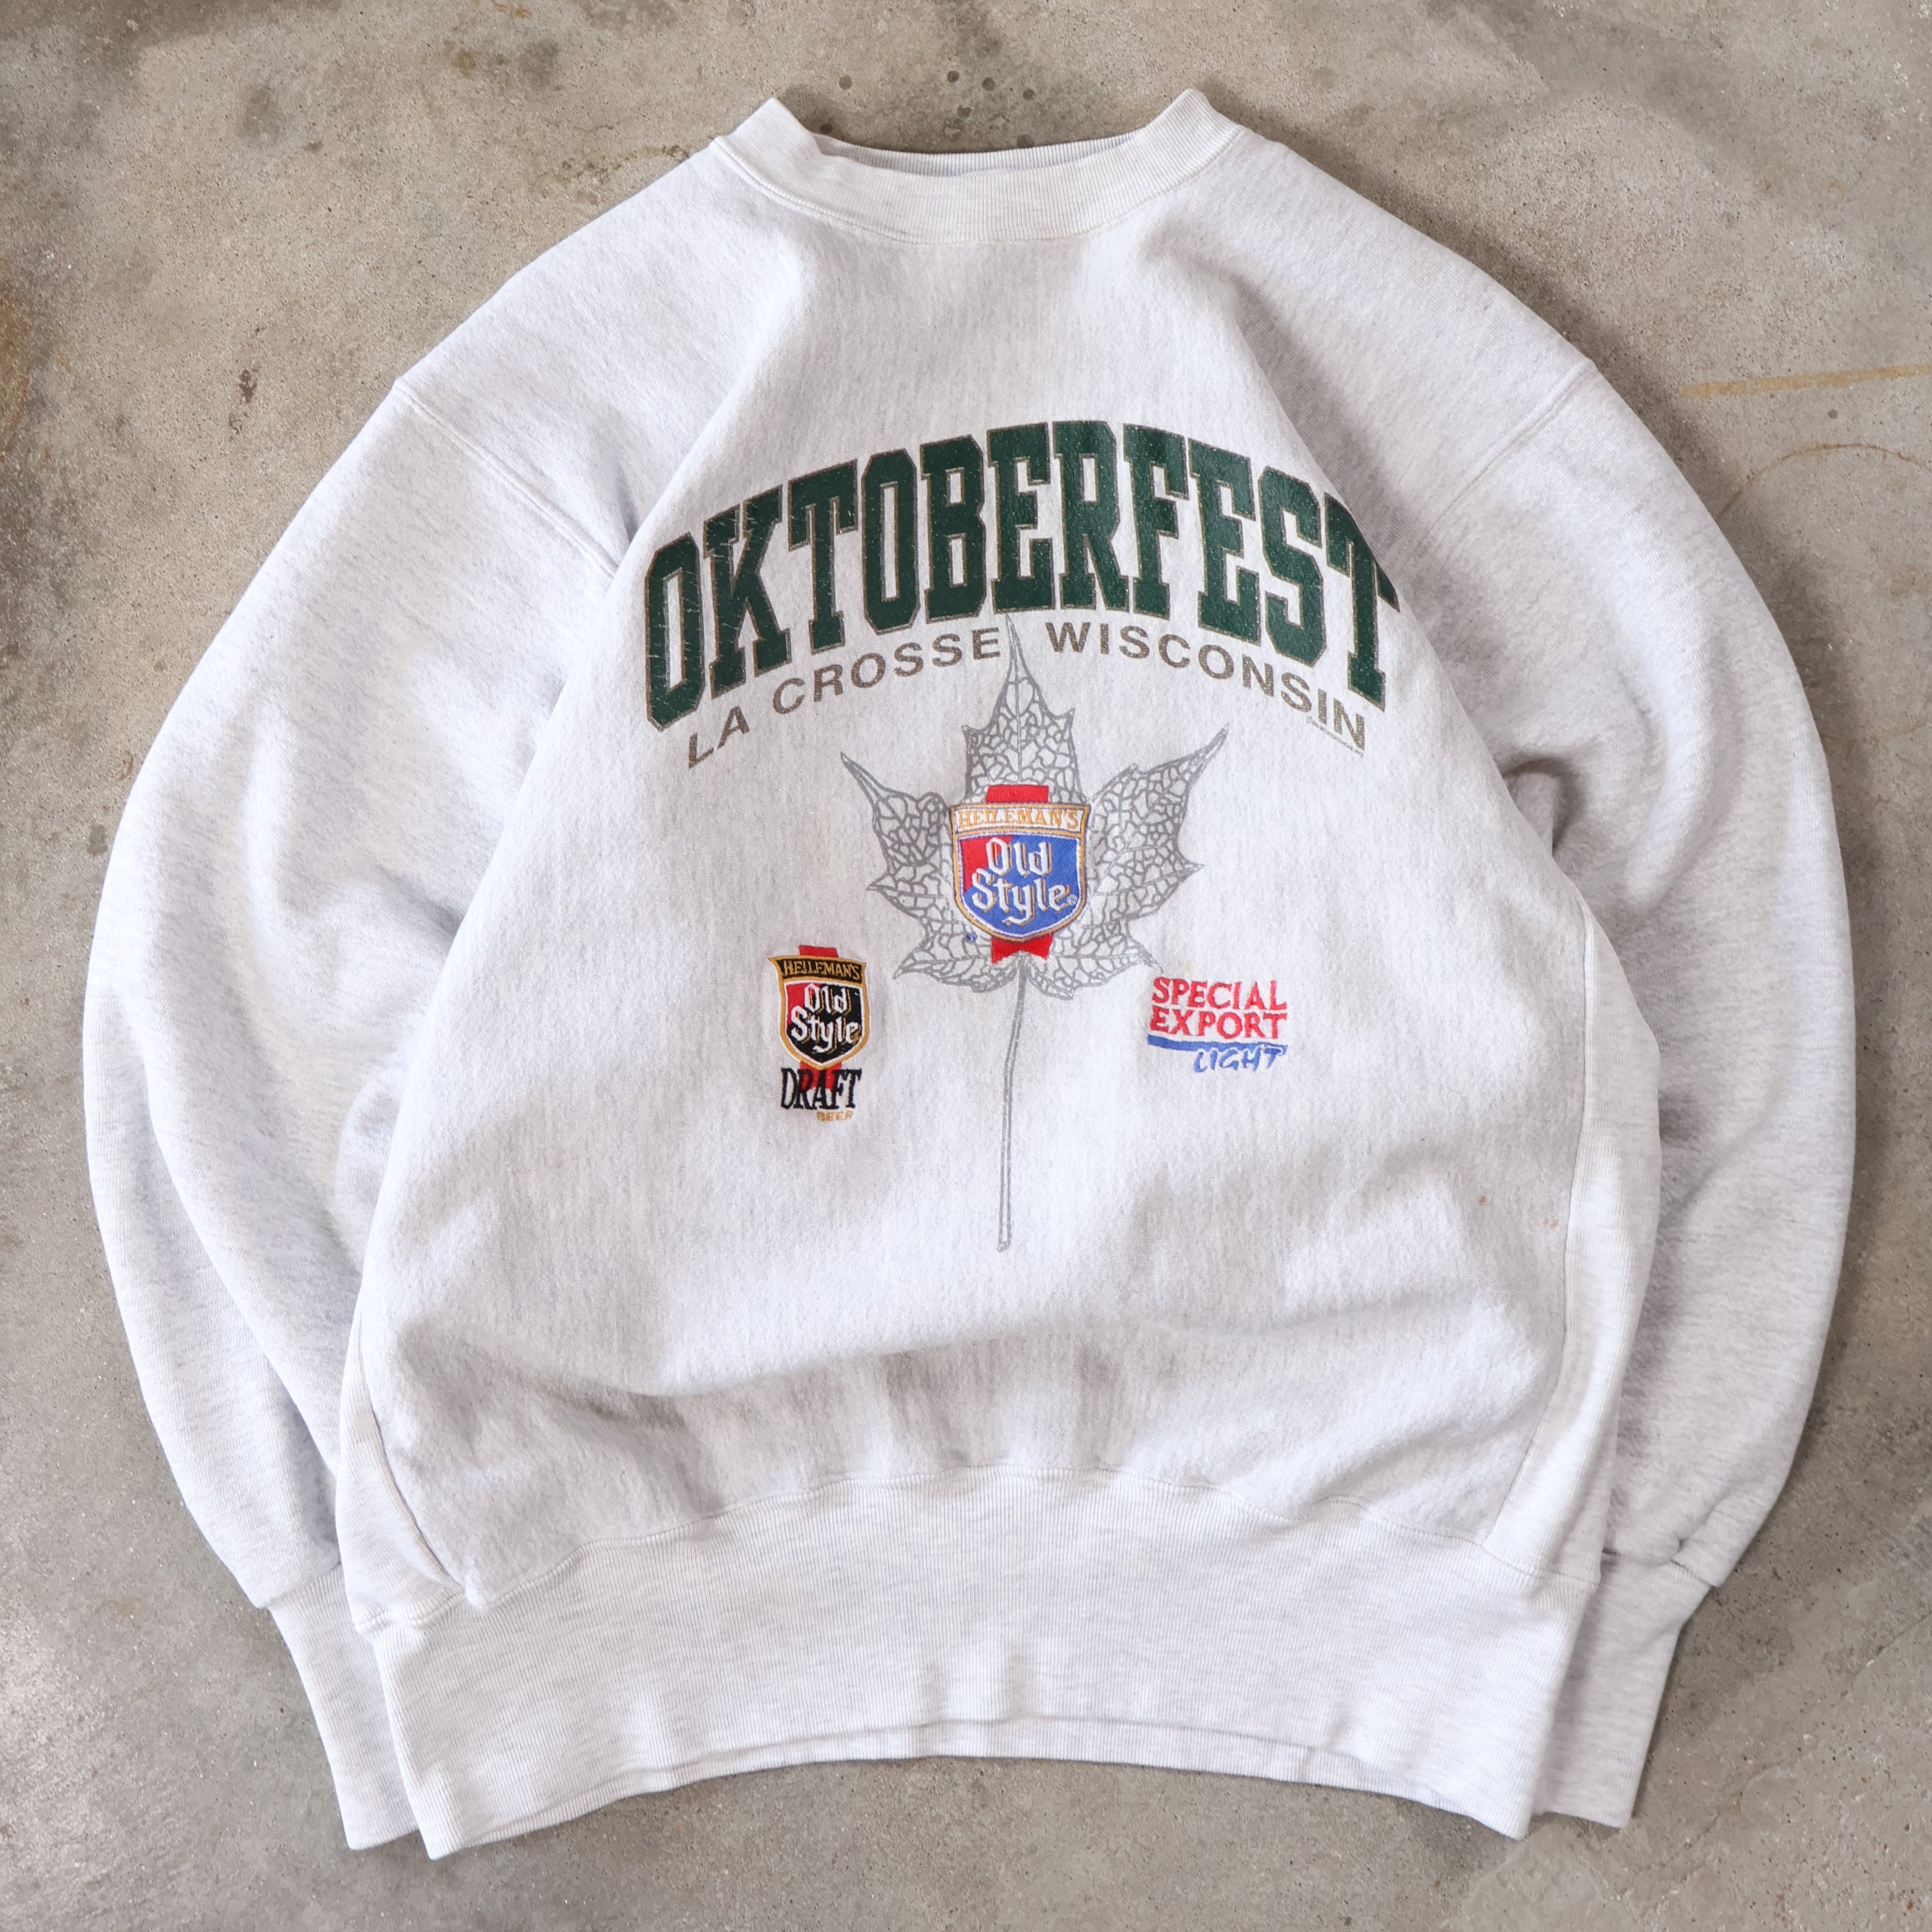 Octoberfest Sweatshirt 90s (Large)